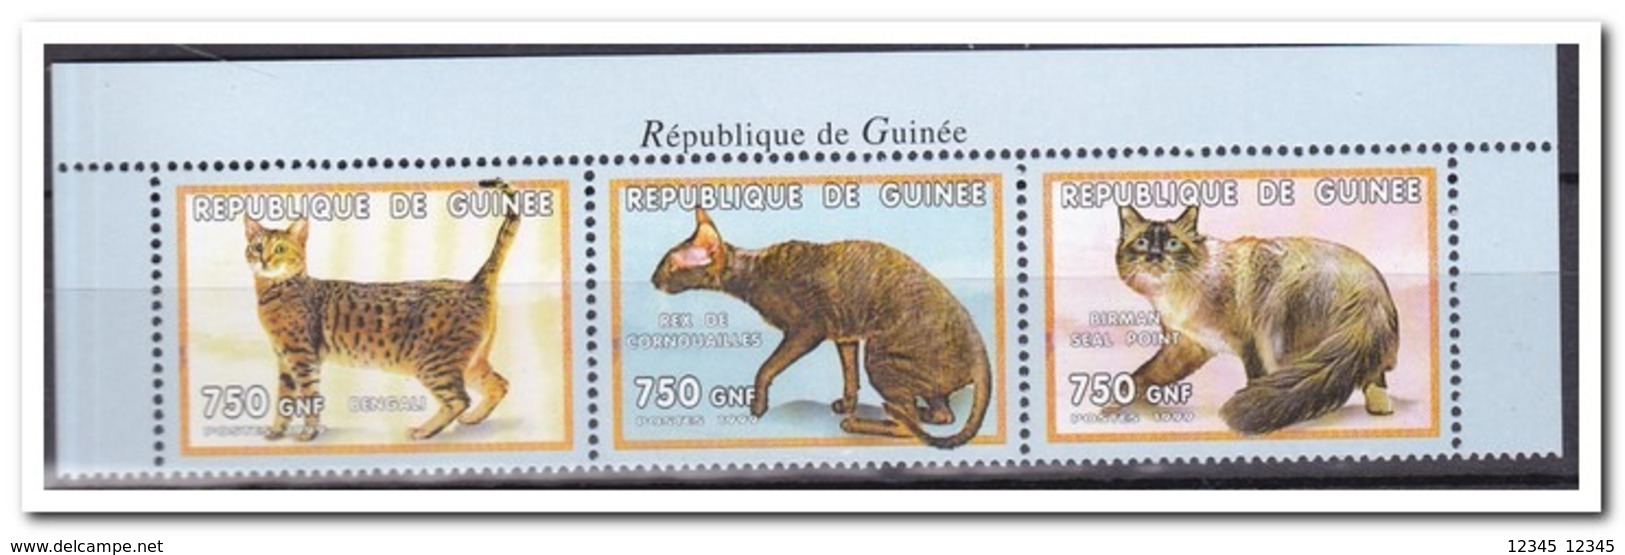 Guinee 1999, Postfris MNH, Cats - Guinee (1958-...)